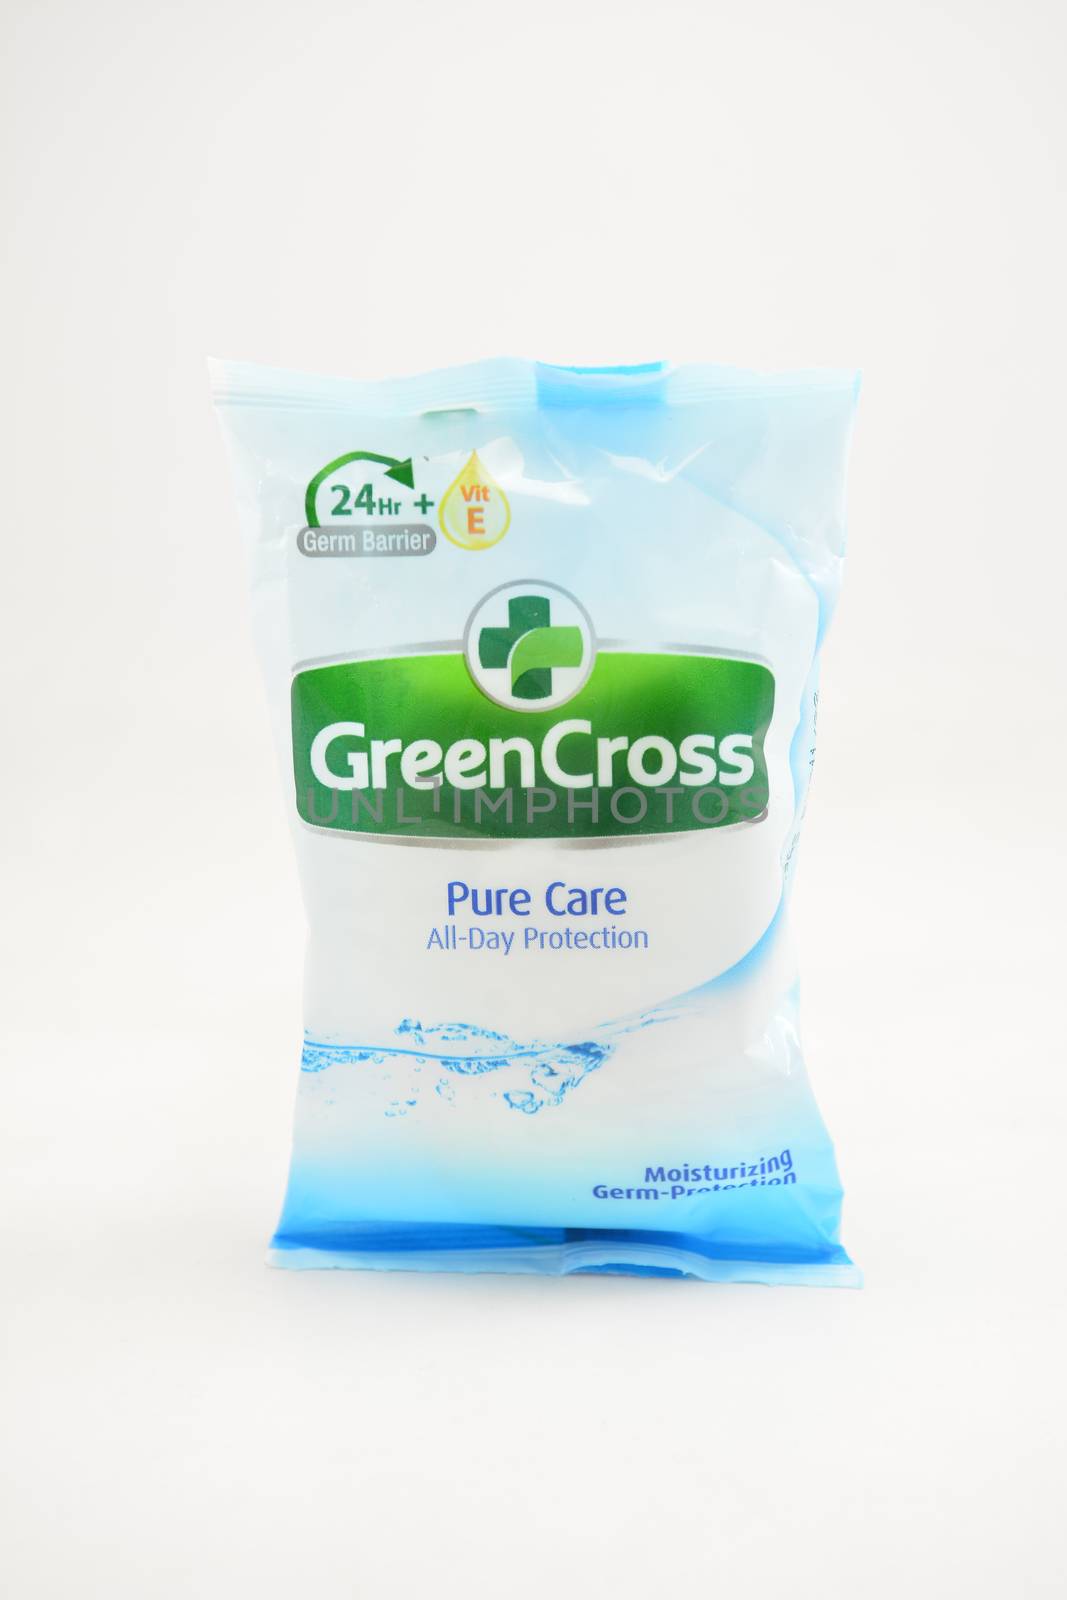 Green cross pure care soap in Manila, Philippines by imwaltersy